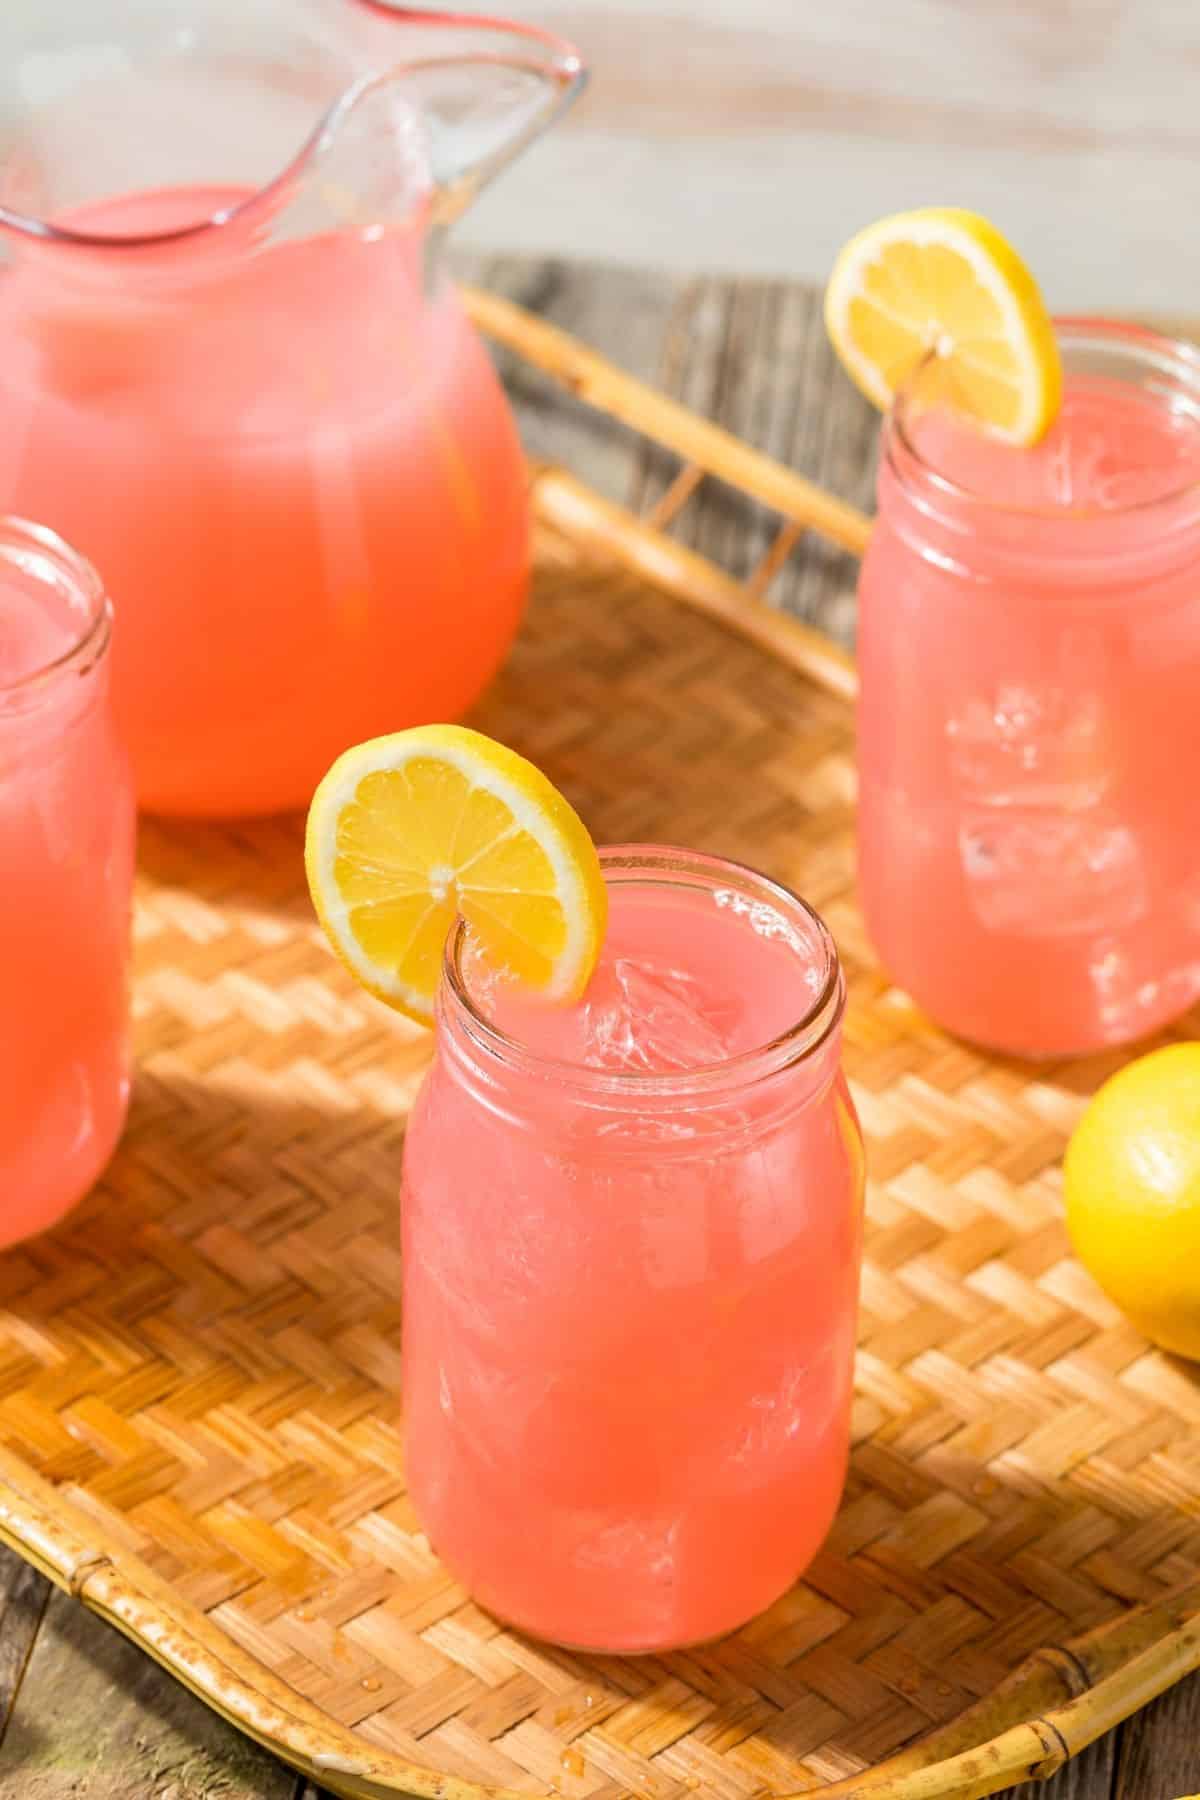 jars of kombucha lemonade with lemon slices on table with pitcher.